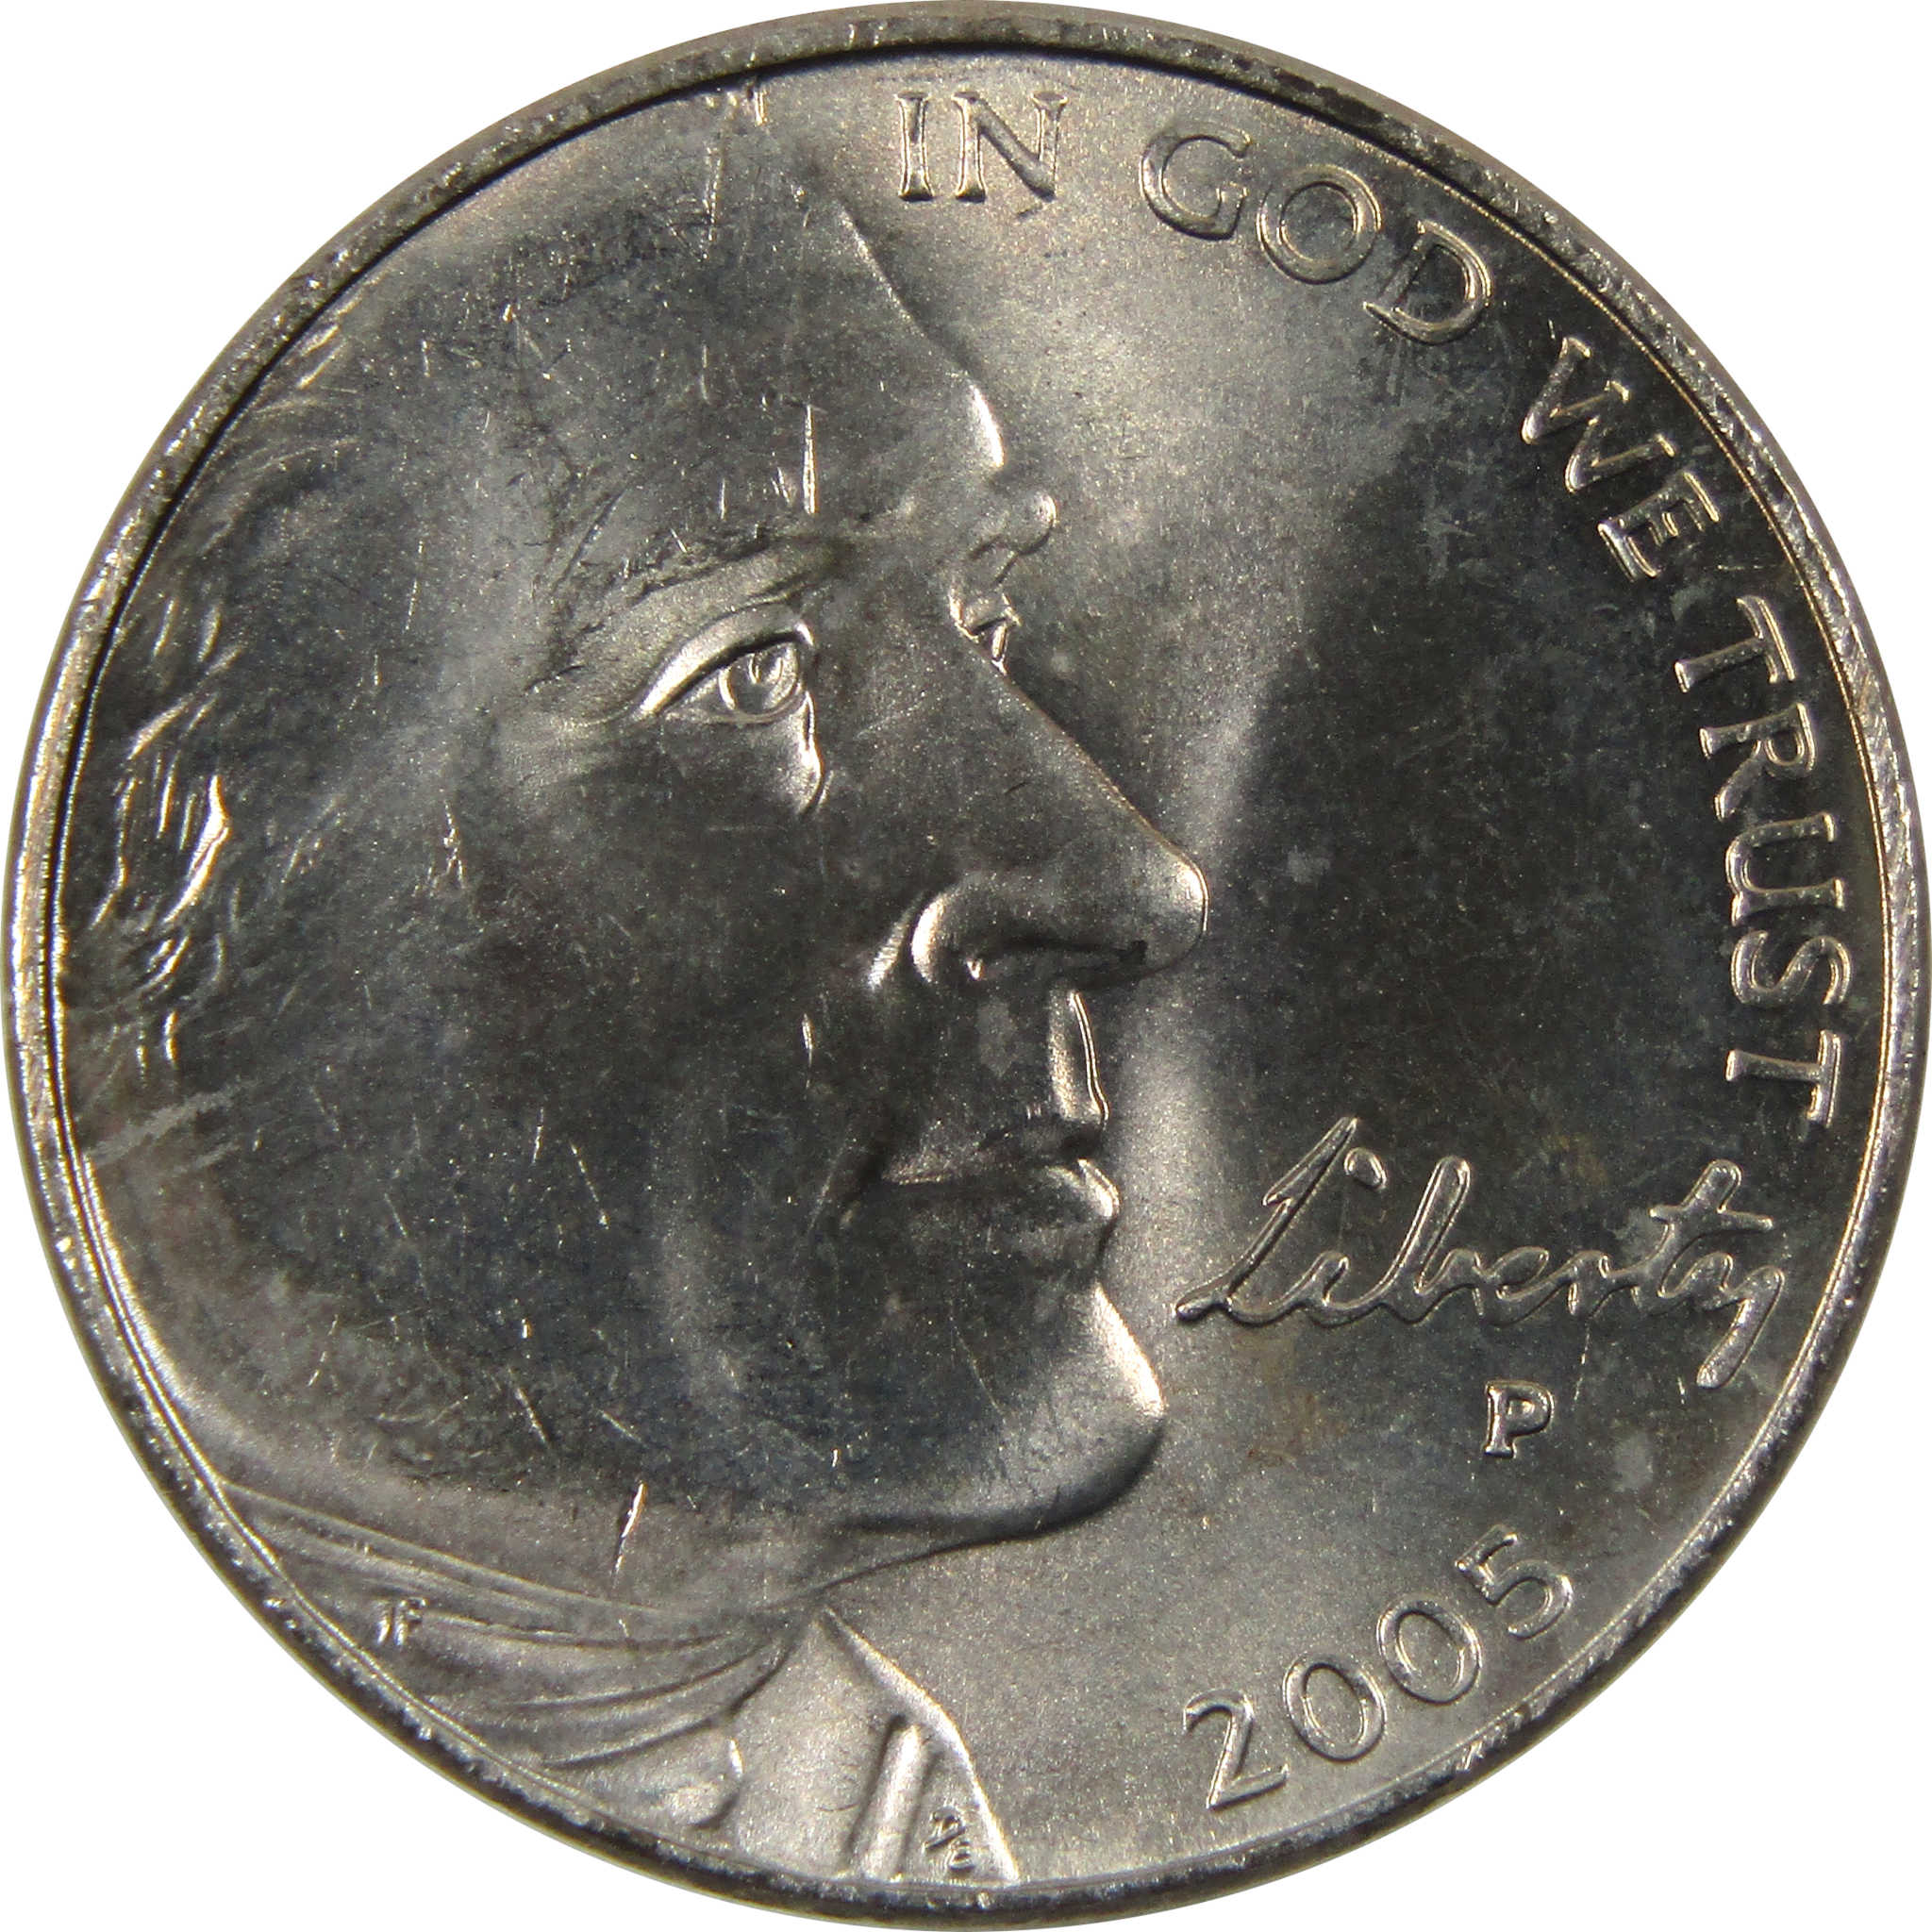 2005 P Ocean in View Jefferson Nickel BU Uncirculated 5c Coin